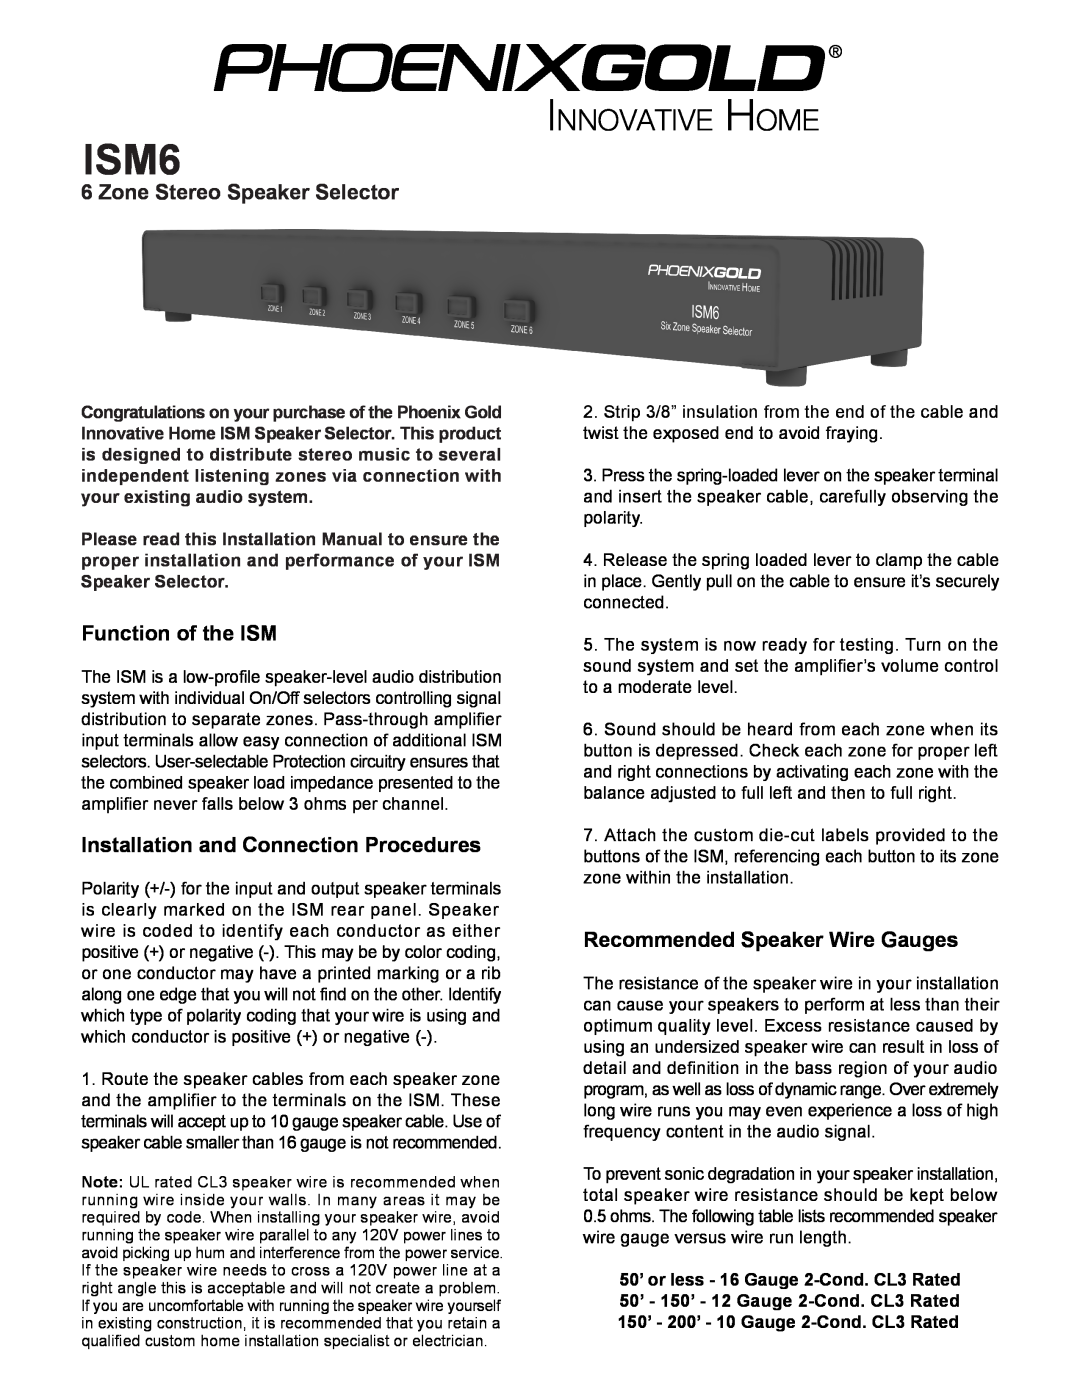 Phoenix Gold owner manual Smart Audio Management Speaker Selectors, Rear Panel of the ISM6, Installation Precautions 